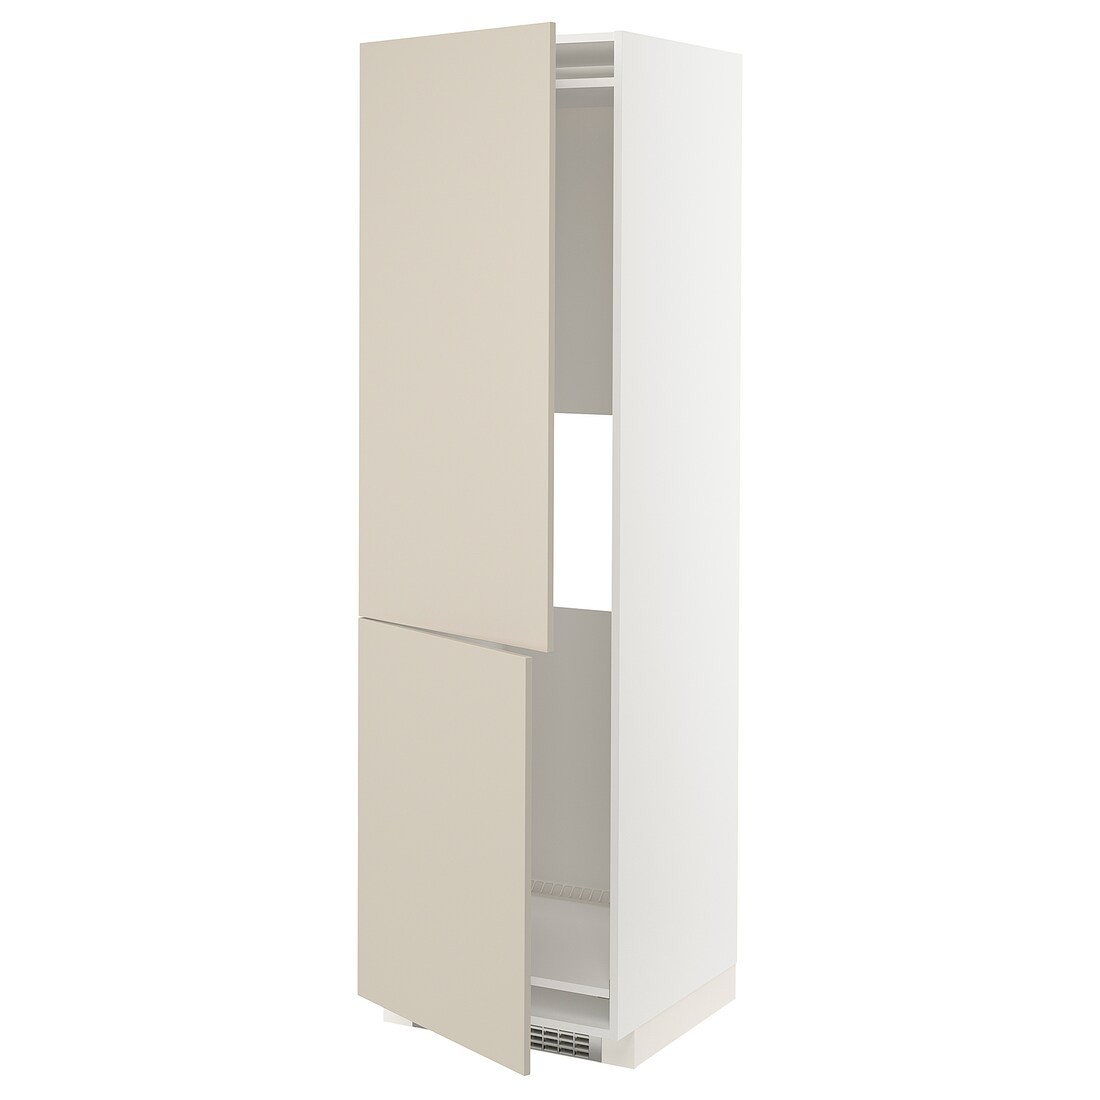 METOD МЕТОД Высокий шкаф для холодильника / морозильника, белый / Havstorp бежевый, 60x60x200 см